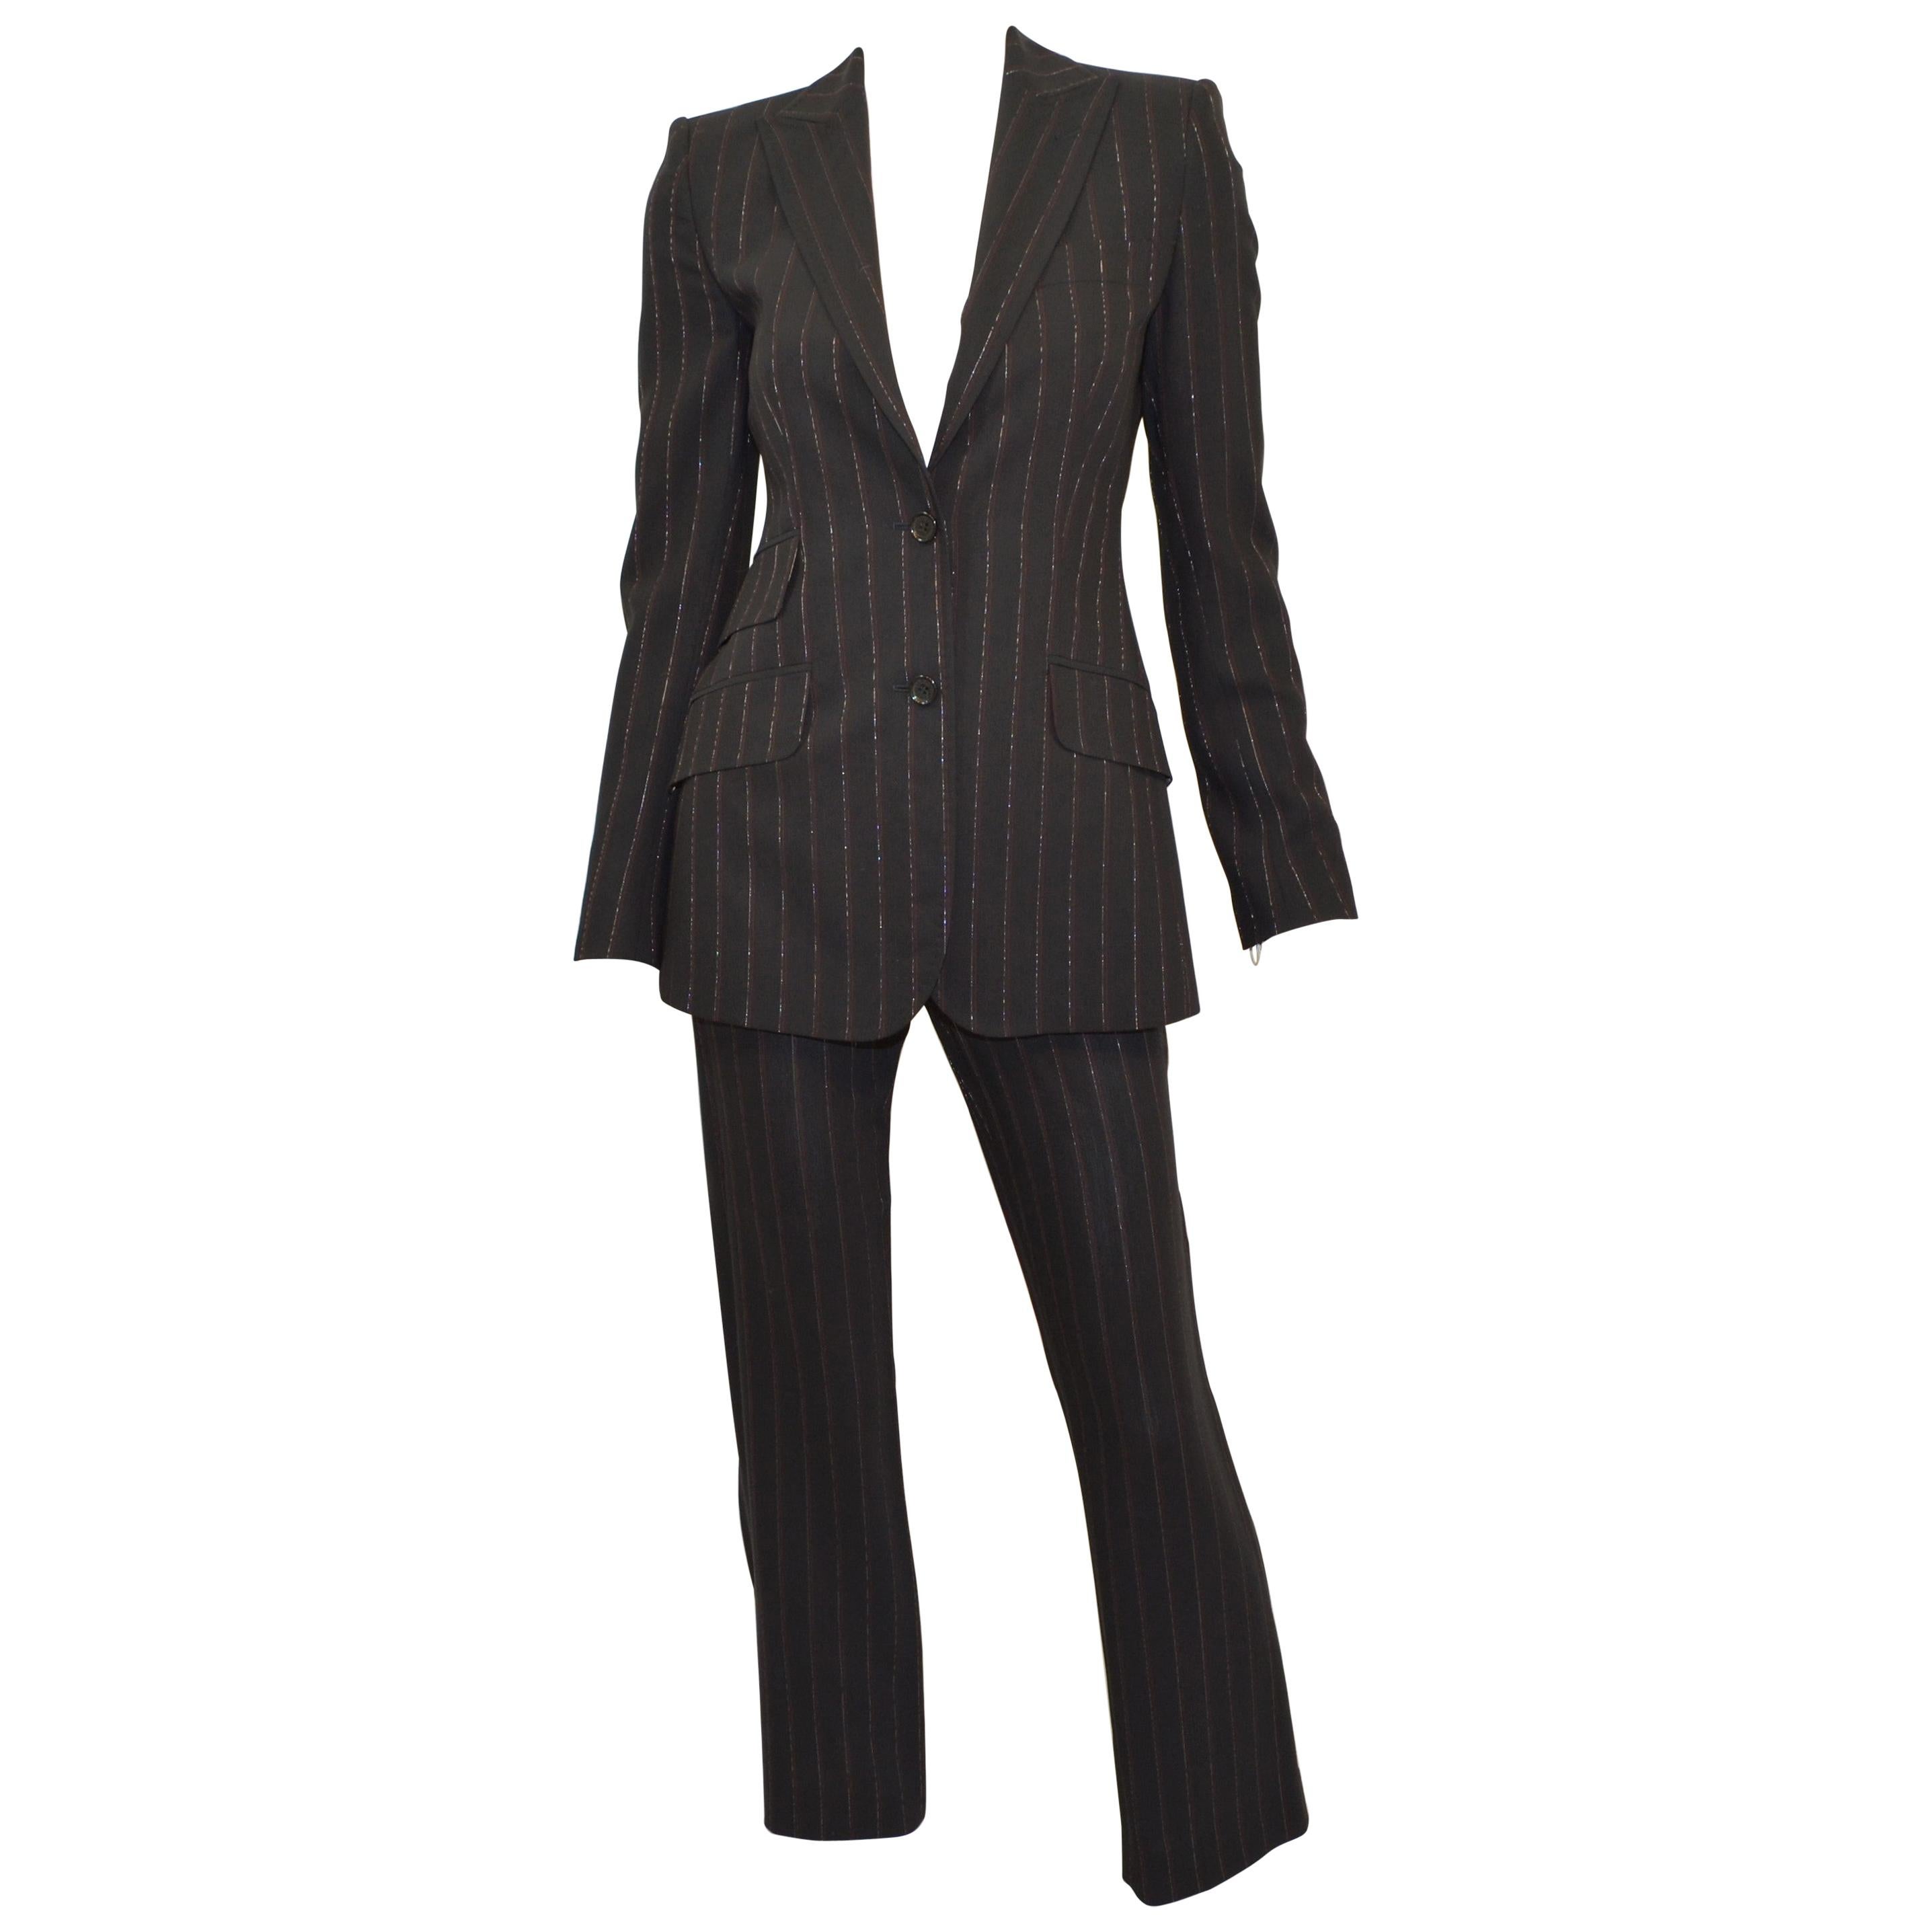 Dolce & Gabbana Black Pinstriped Jacket and Pants Suit Set